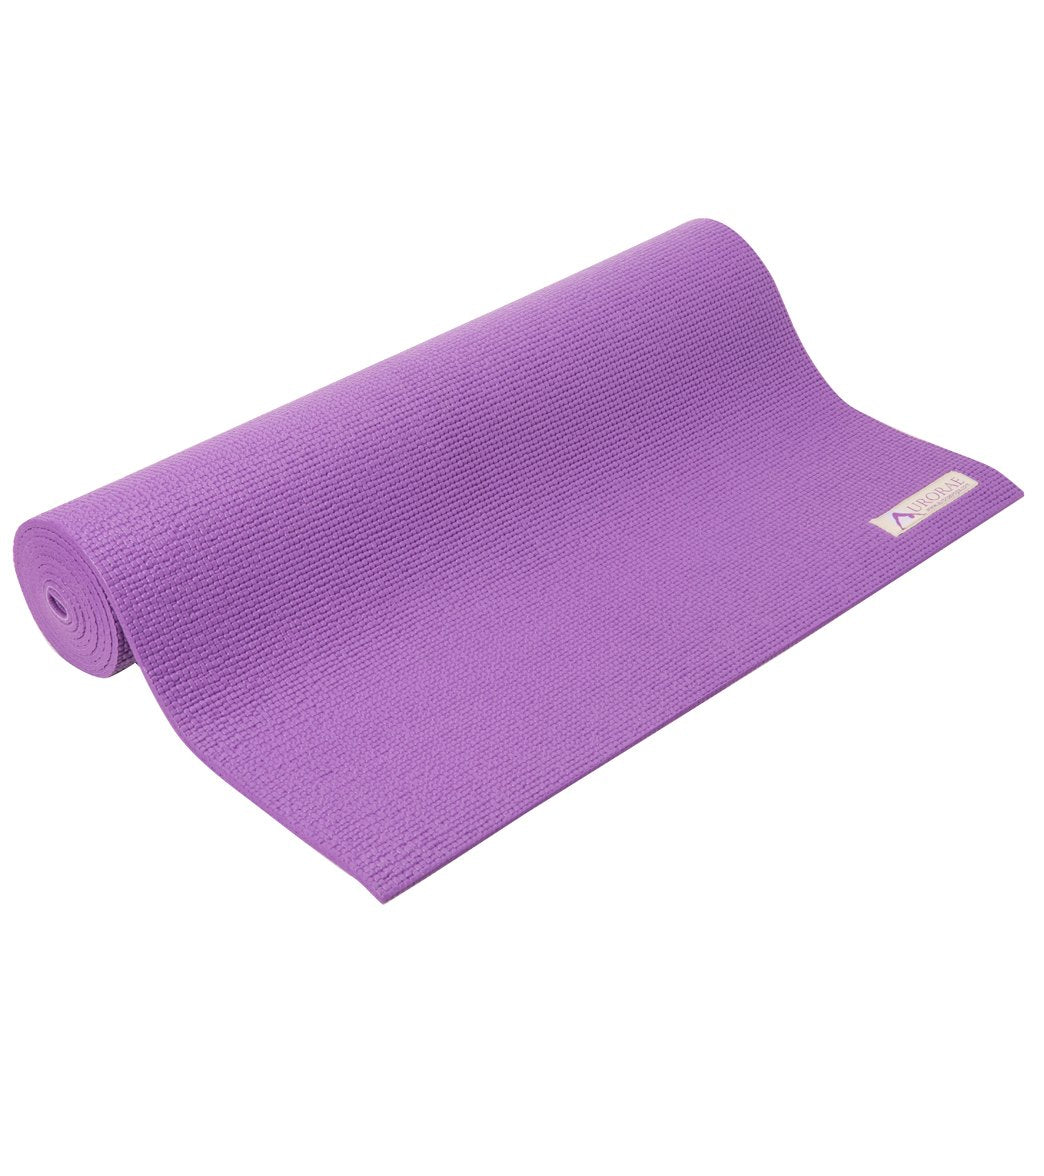 Products - Accessories - Rosin Bag — Aurorae Yoga